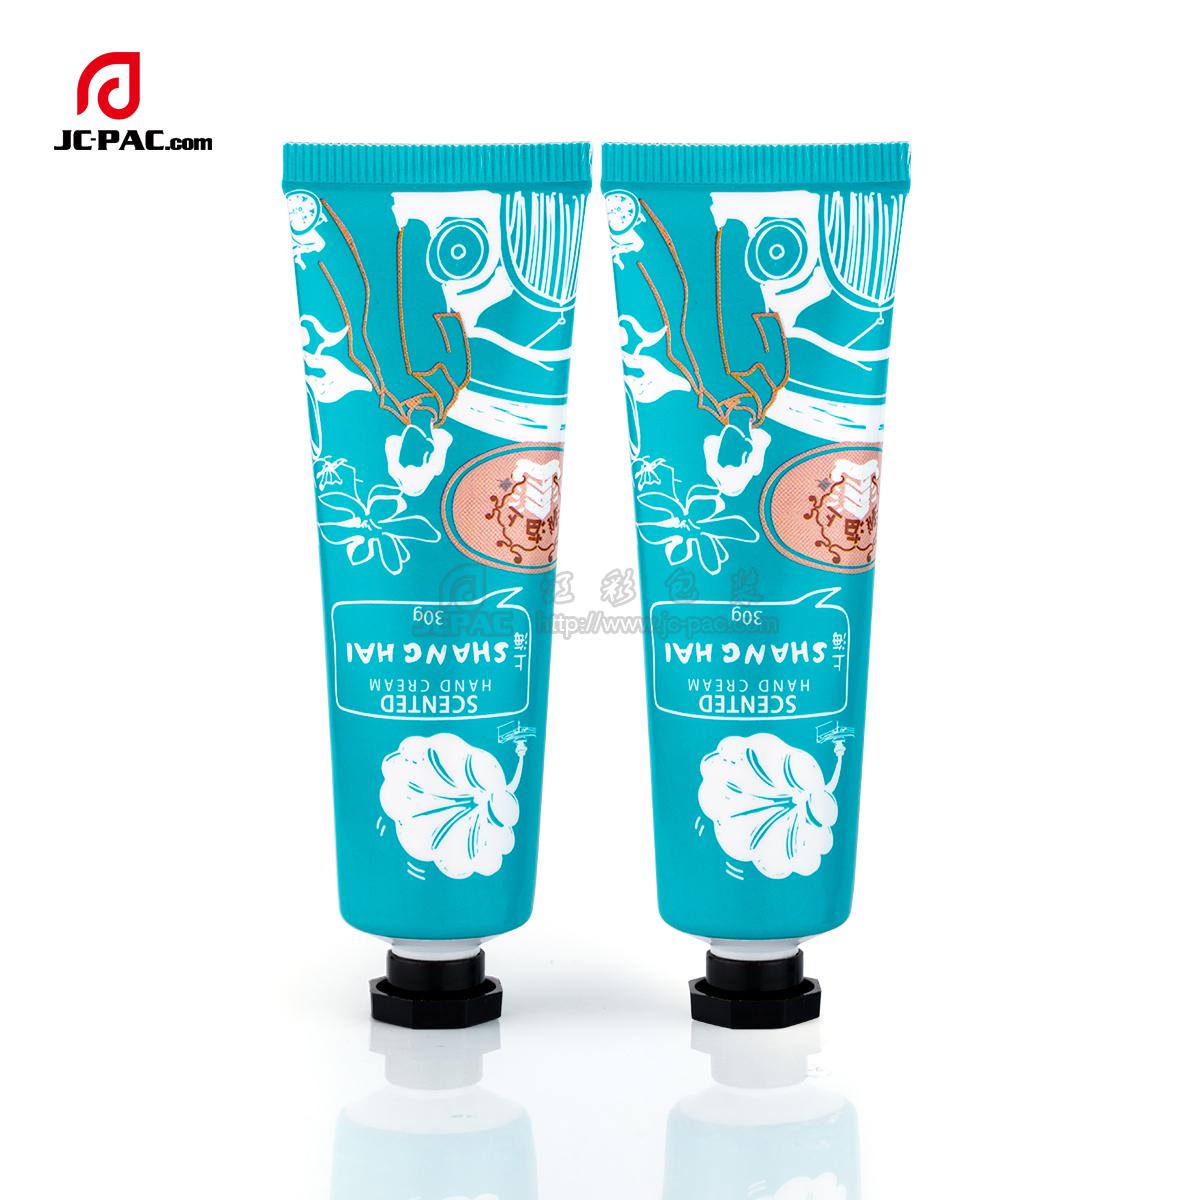 AB250146  30ml aluminum Plastic soft tube , cosmetic tube, hand cream Package